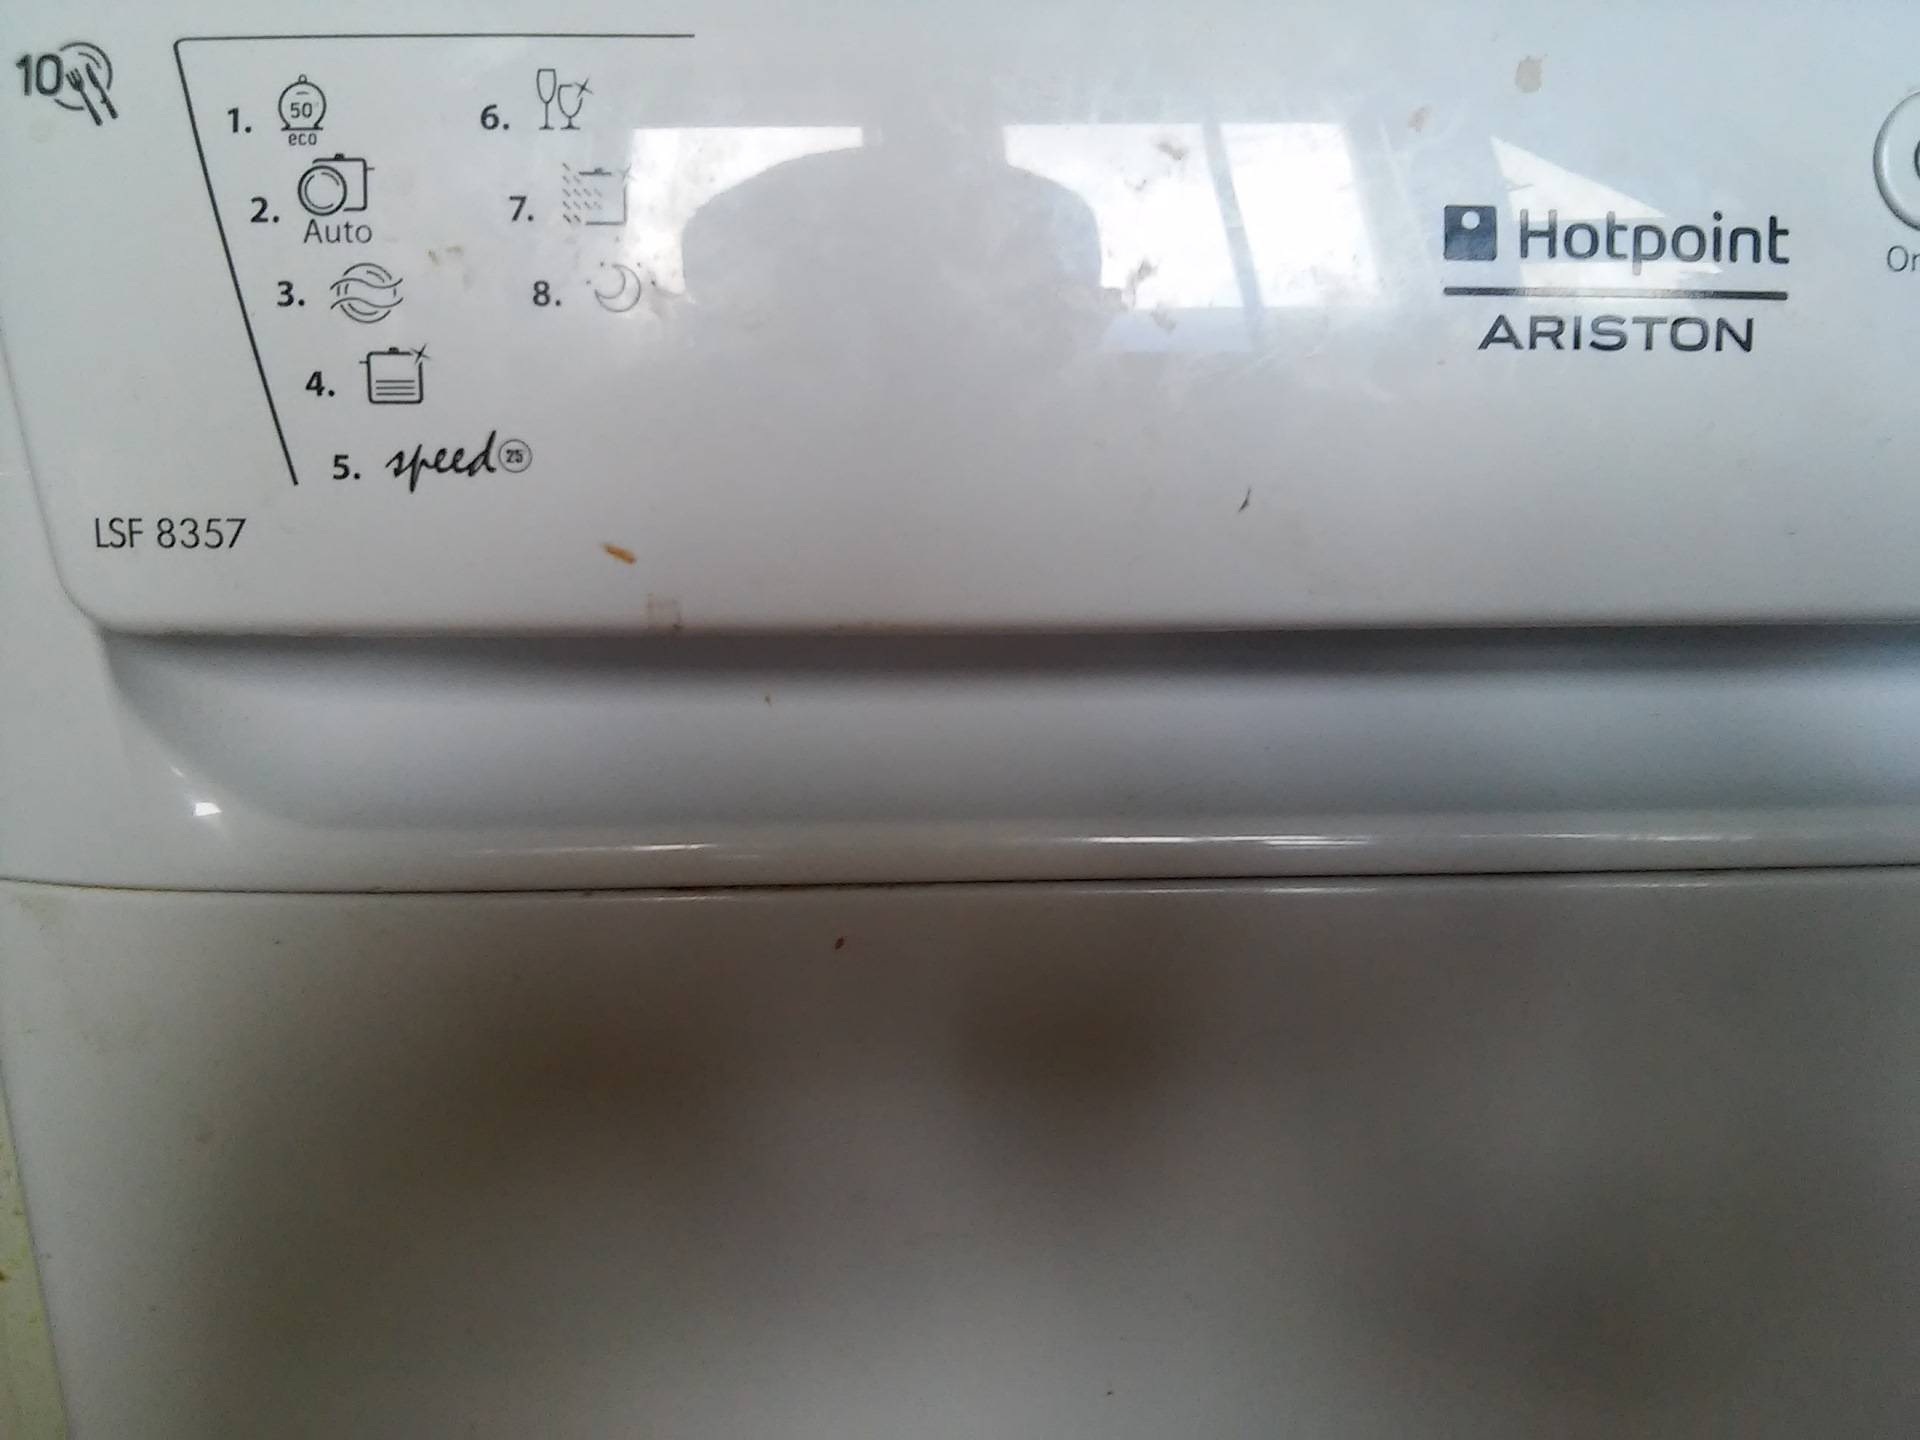 Посудомоечная машина hotpoint ariston - ошибка 5